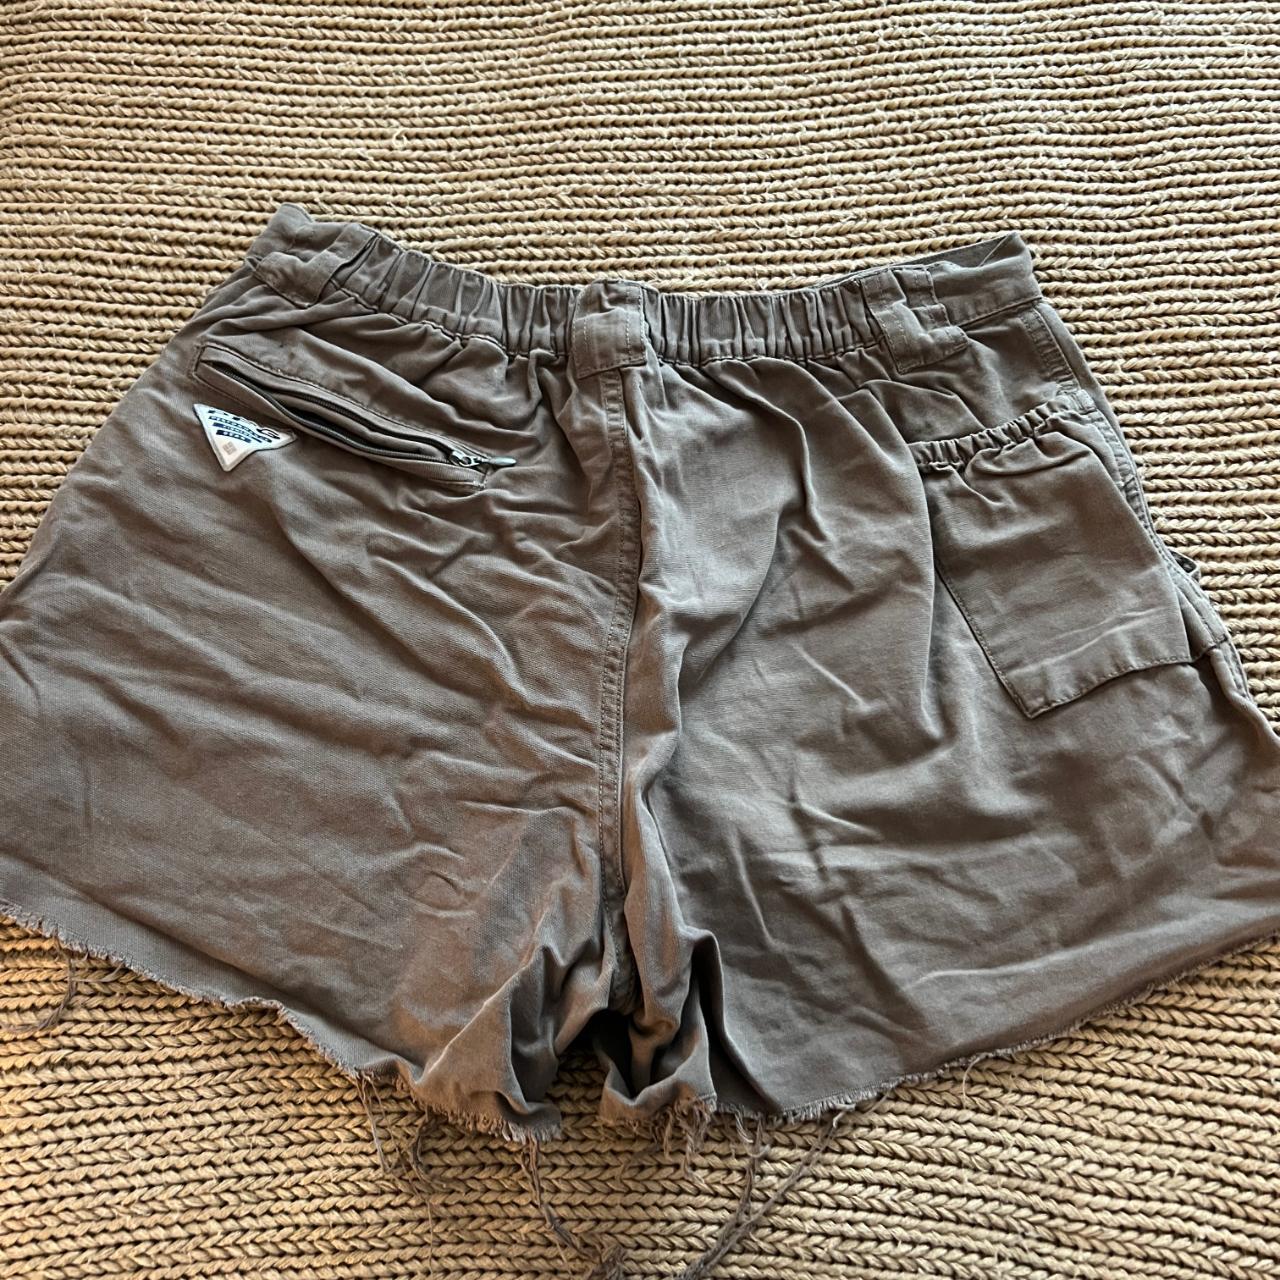 Columbia PFG cargo shorts with elastic waistband.... - Depop